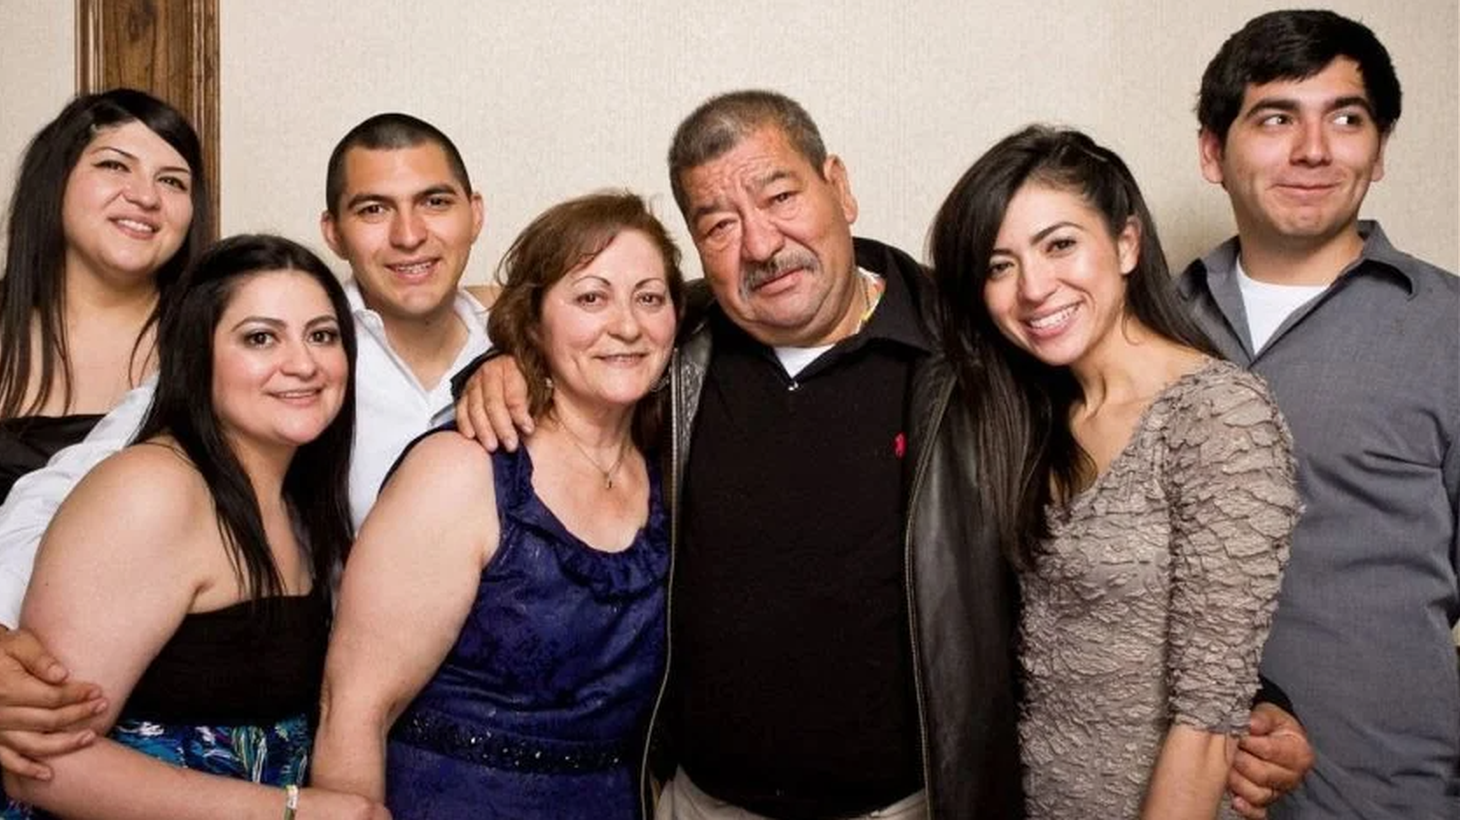 Francisco Ramirez (center) and his family. From left: Mavel, Monica, Francisco Jr., his wife Amalia, Mayra Rodriguez, and Edward.